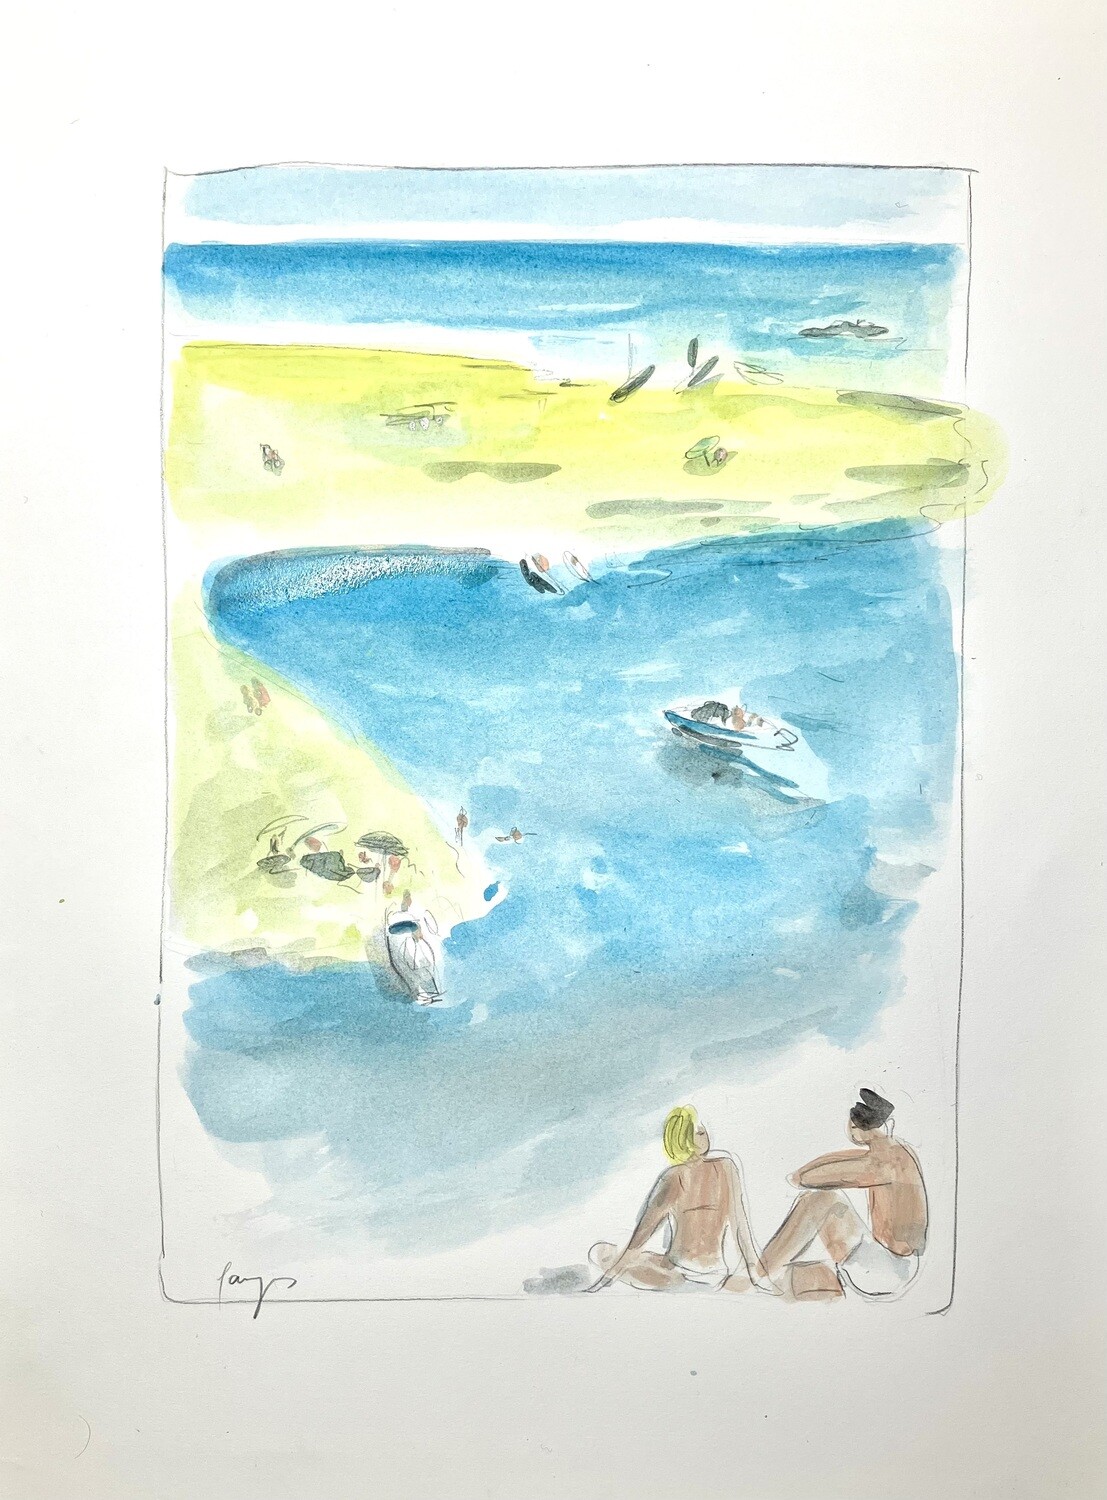 Cap Ferret / By the beach 4 dessins / drawings